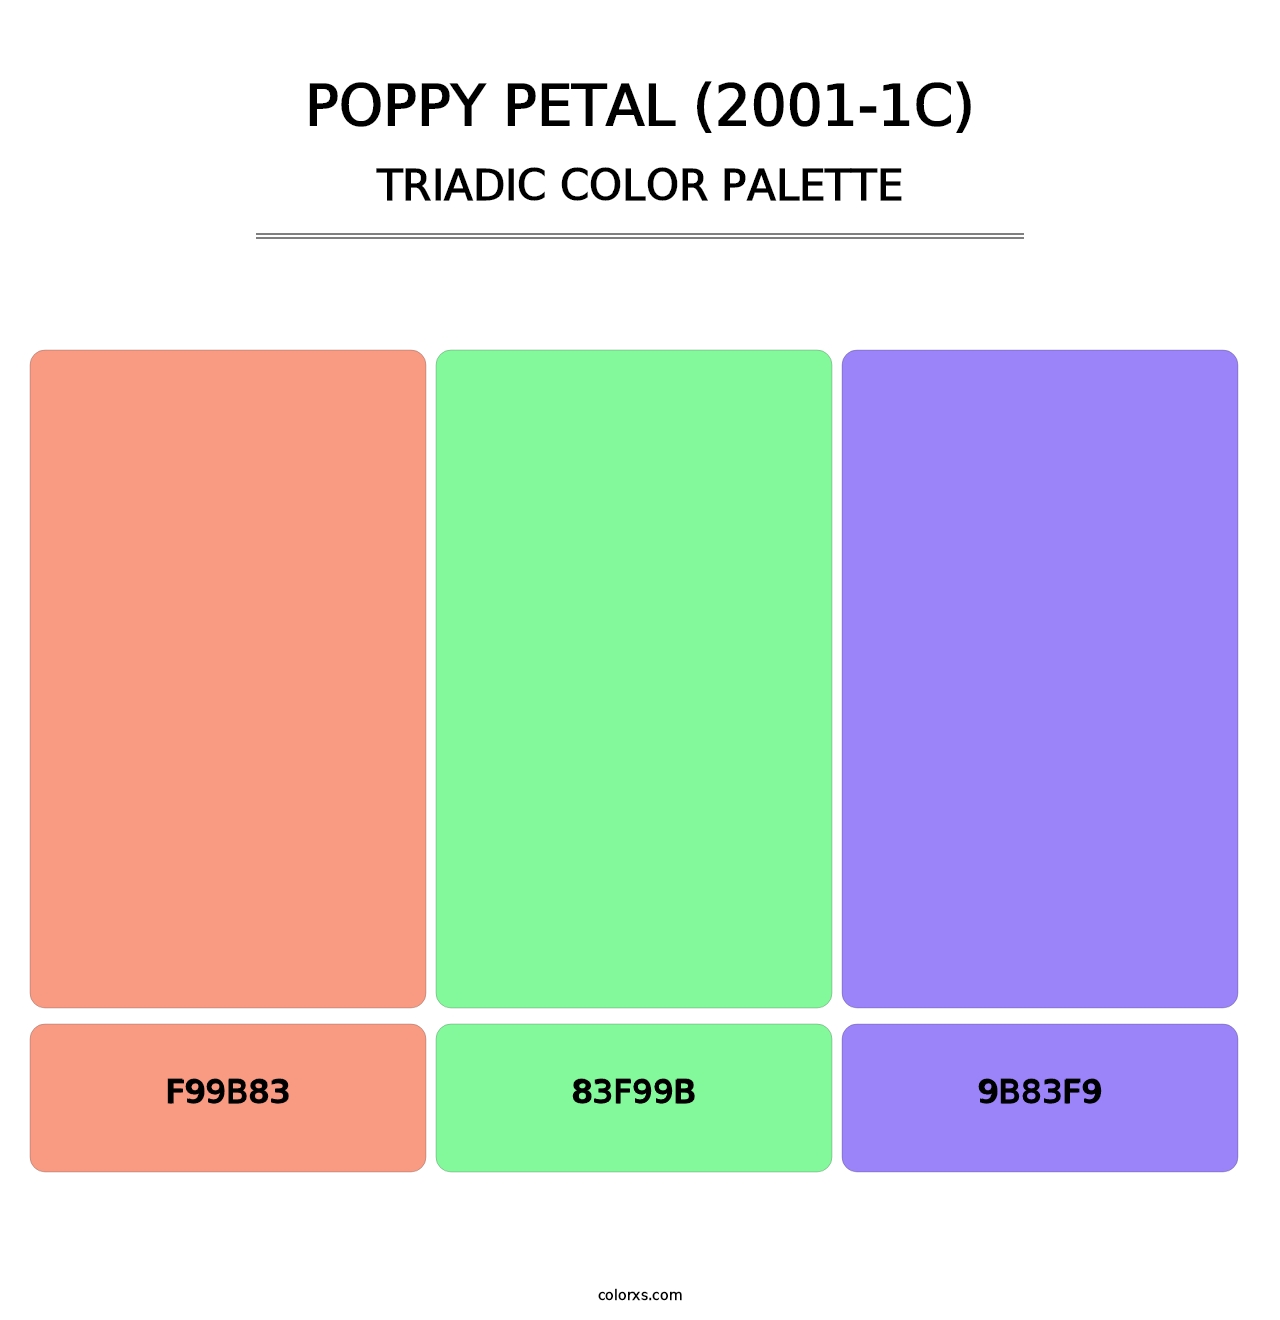 Poppy Petal (2001-1C) - Triadic Color Palette